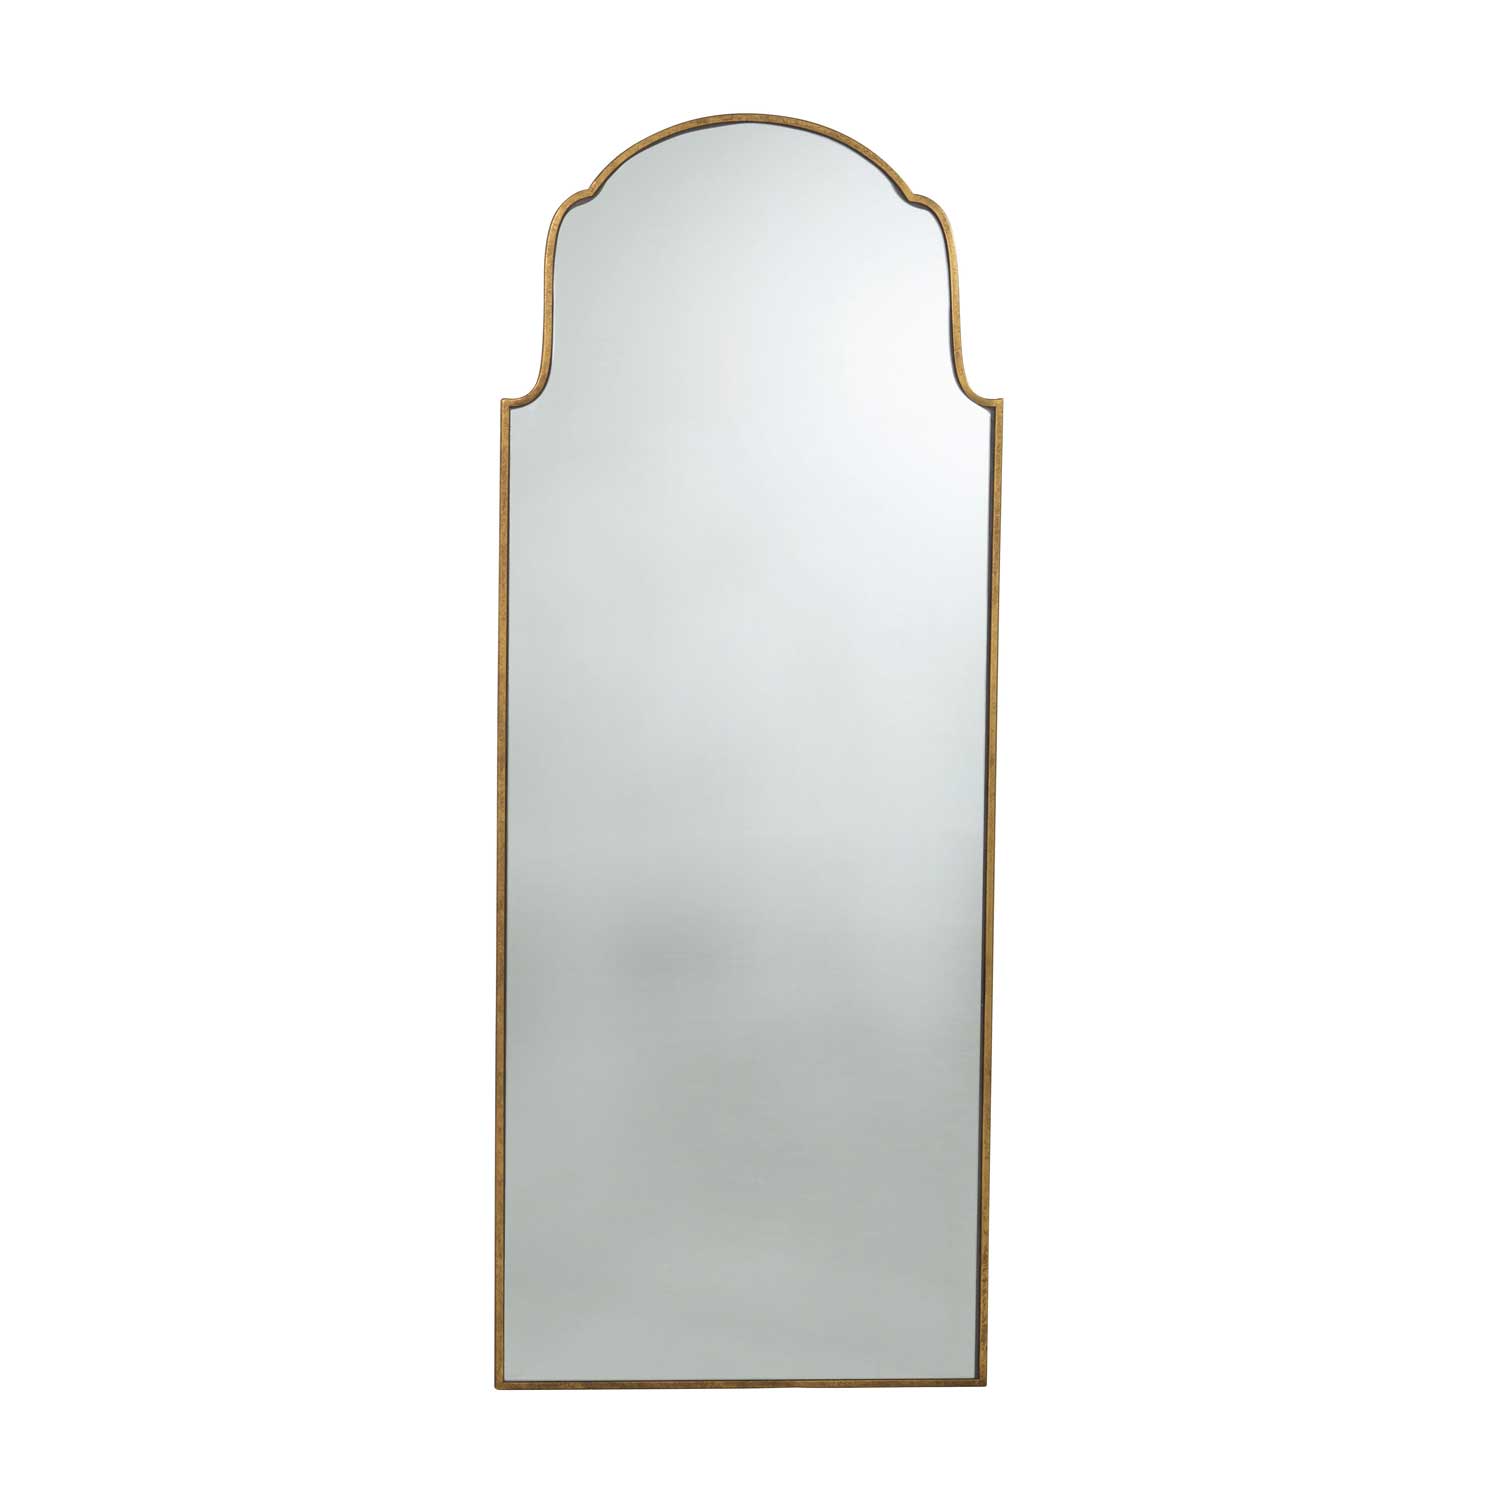 pauline mirror product image